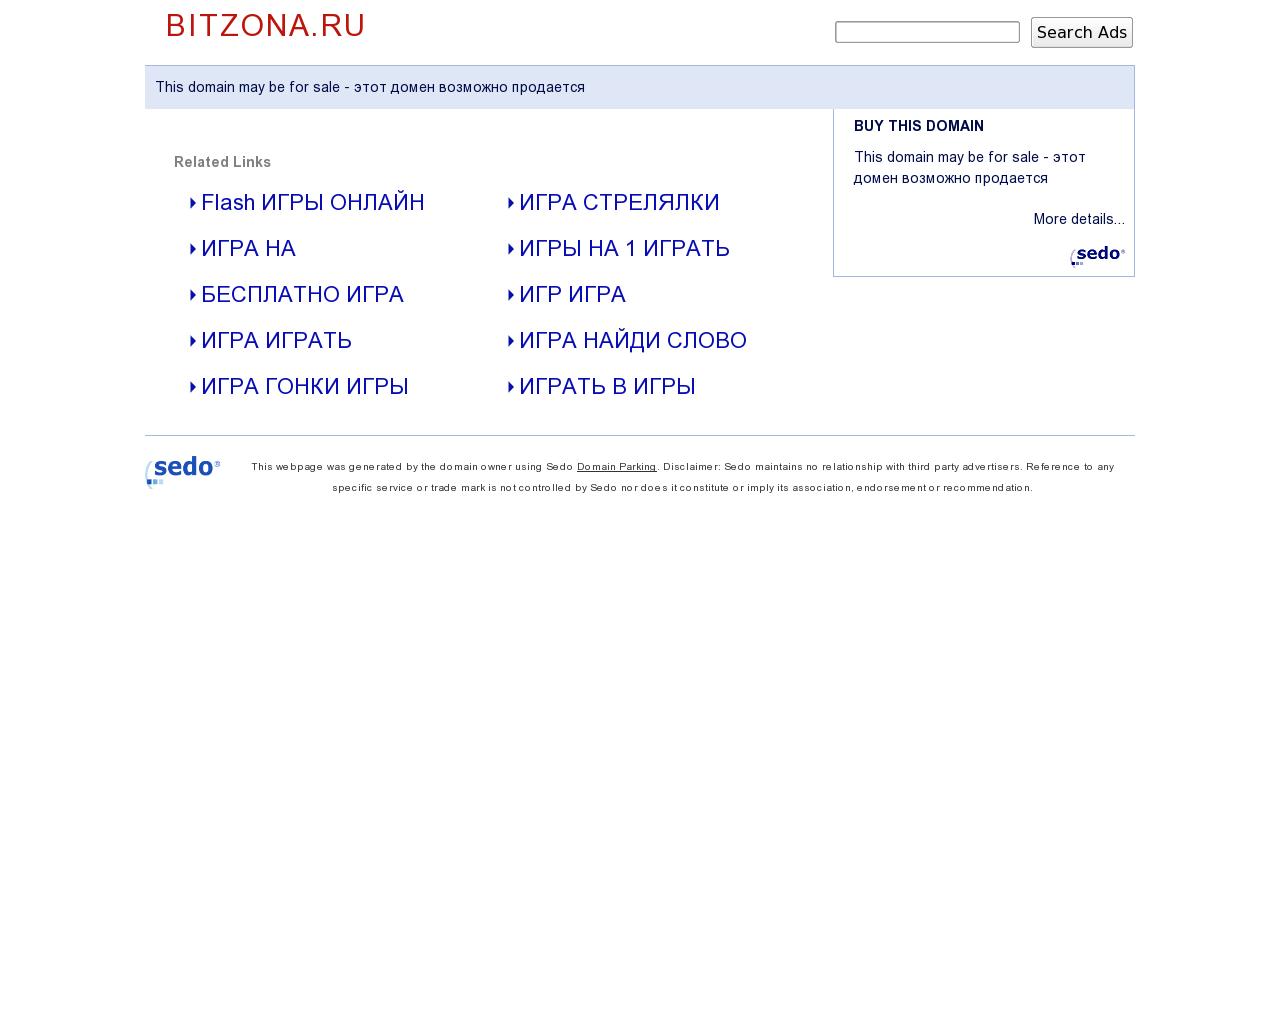 Изображение сайта bitzona.ru в разрешении 1280x1024